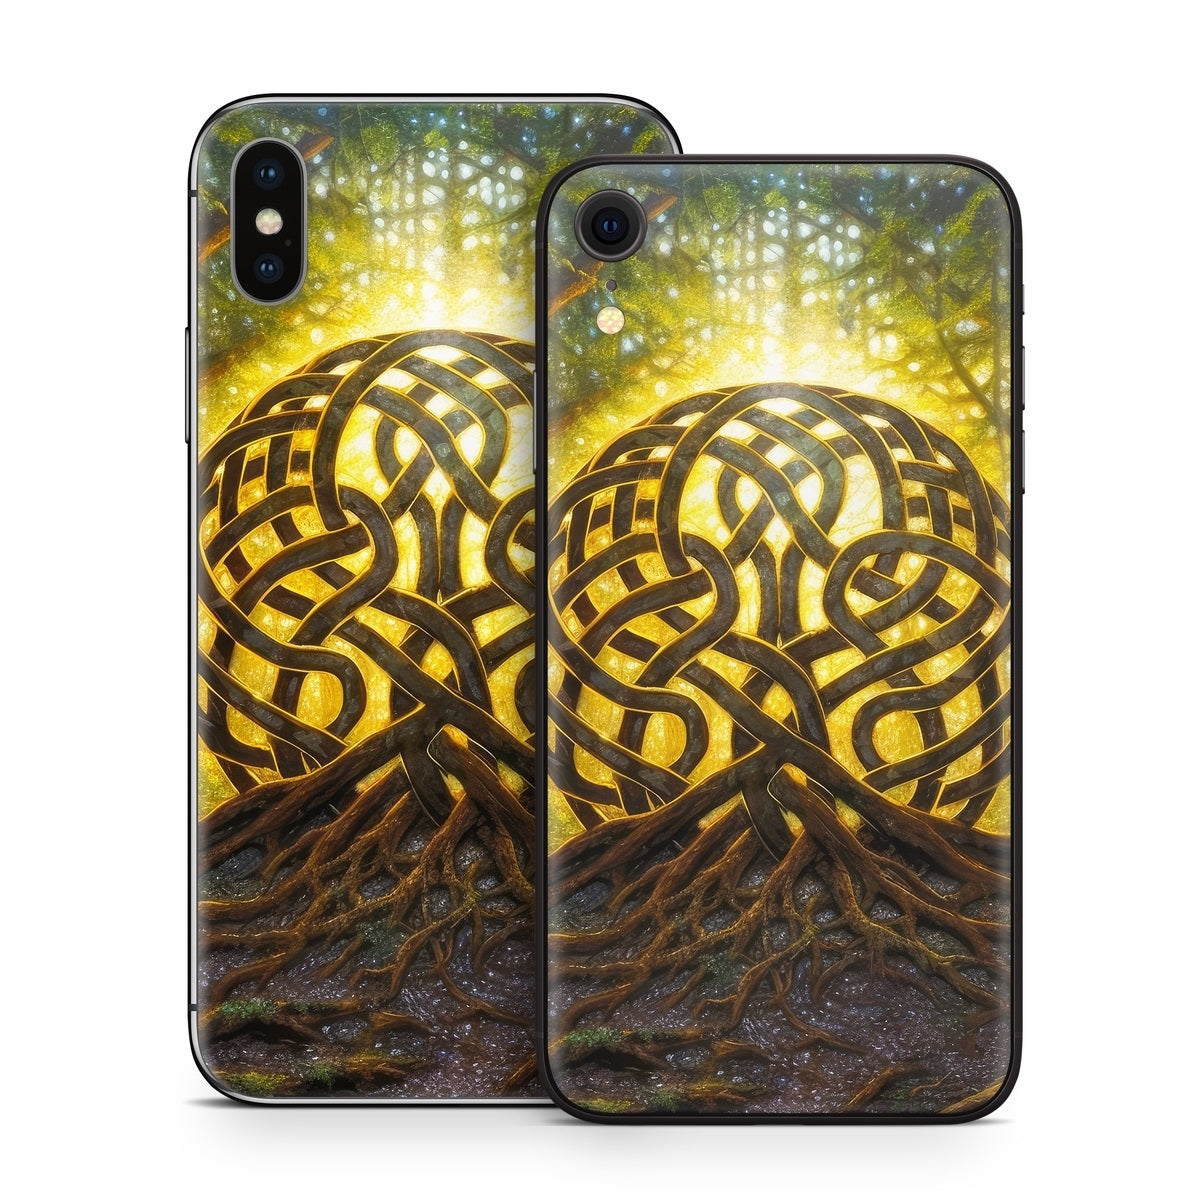 Eternal Woodland - Apple iPhone X Skin